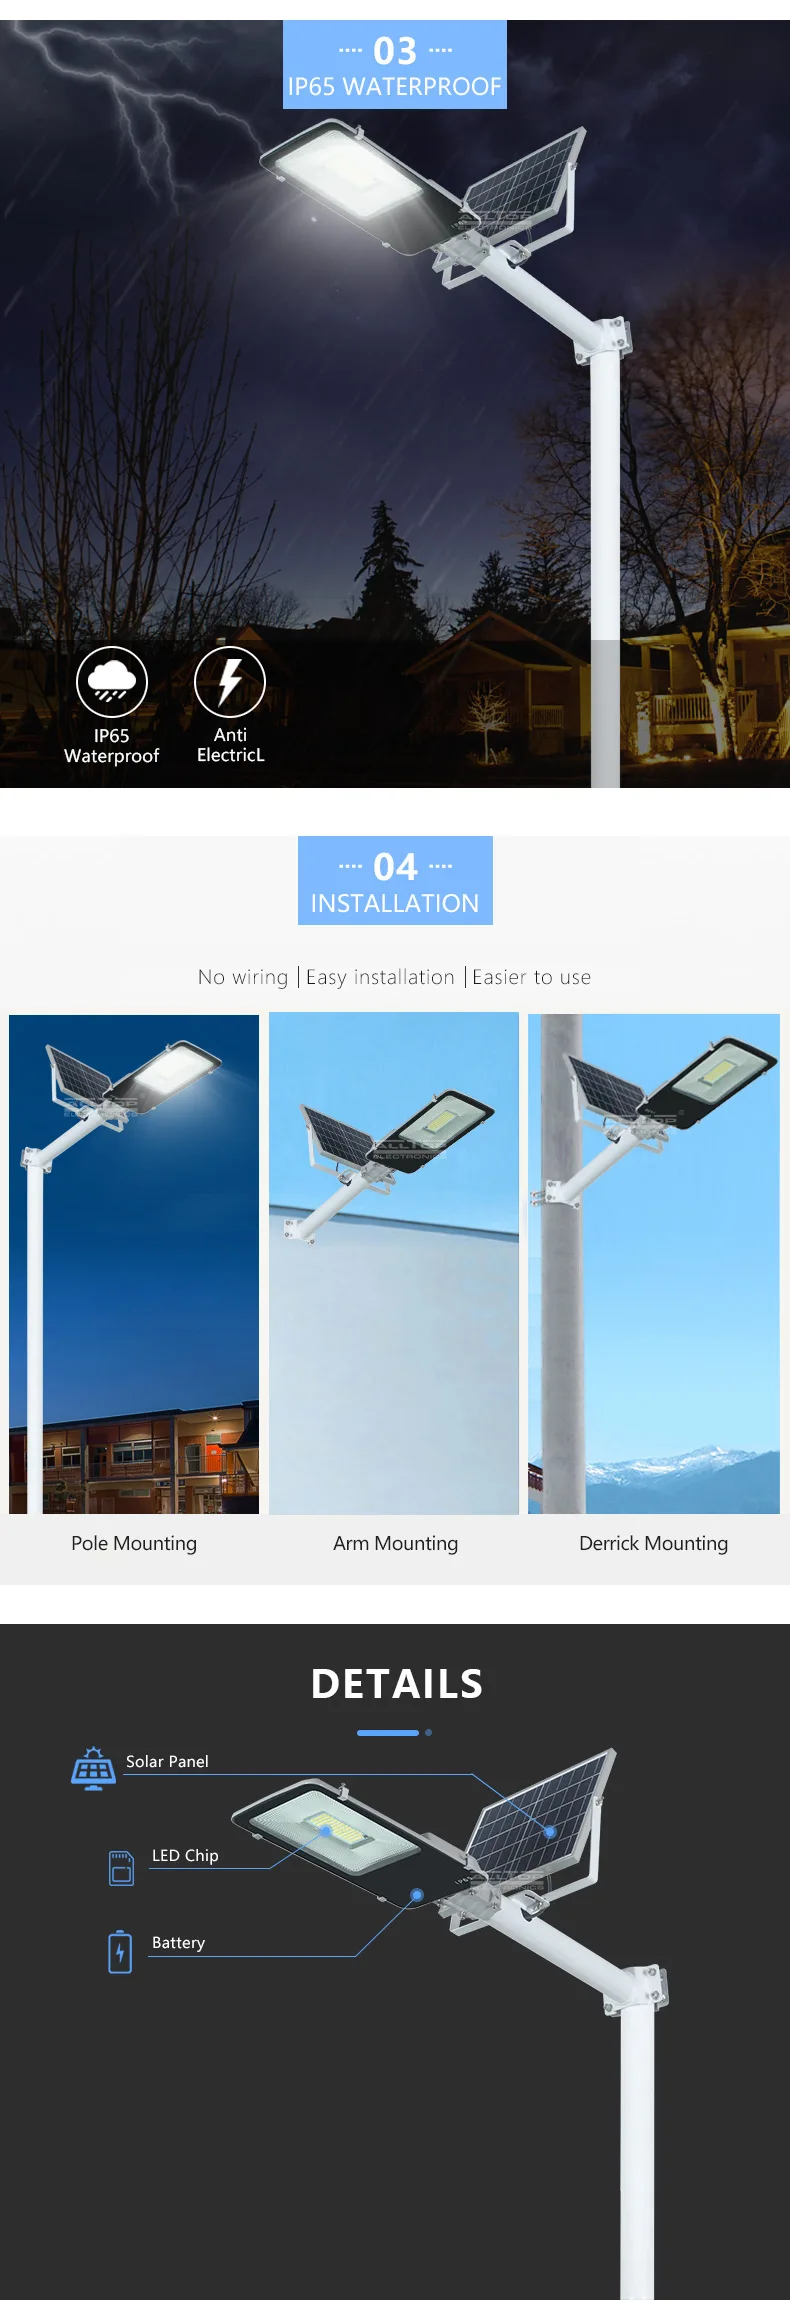 ALLTOP Bridgelux smd waterproof outdoor lighting ip65 100w solar led street light